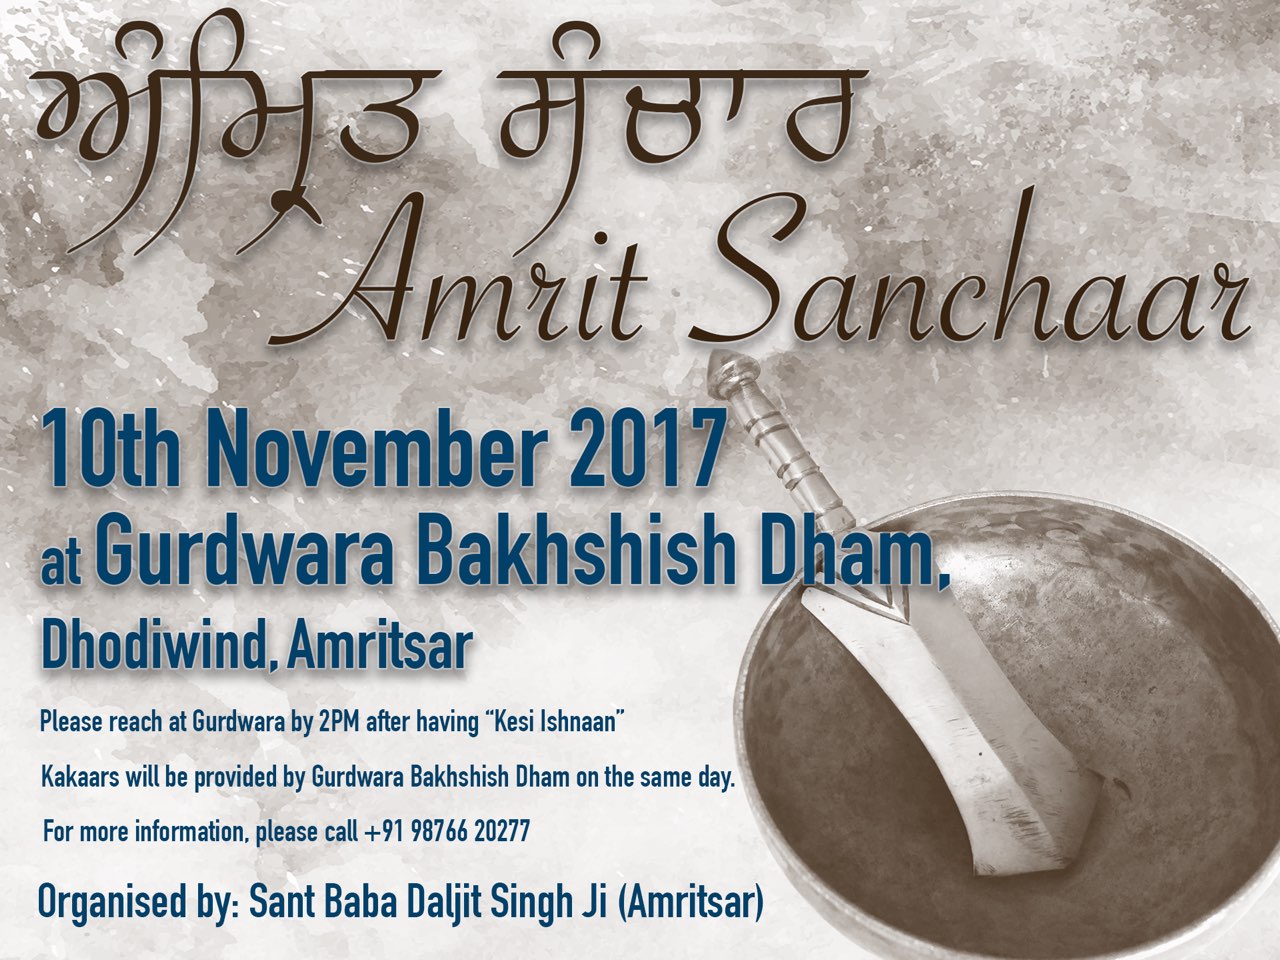 2017: Amrit Sanchar